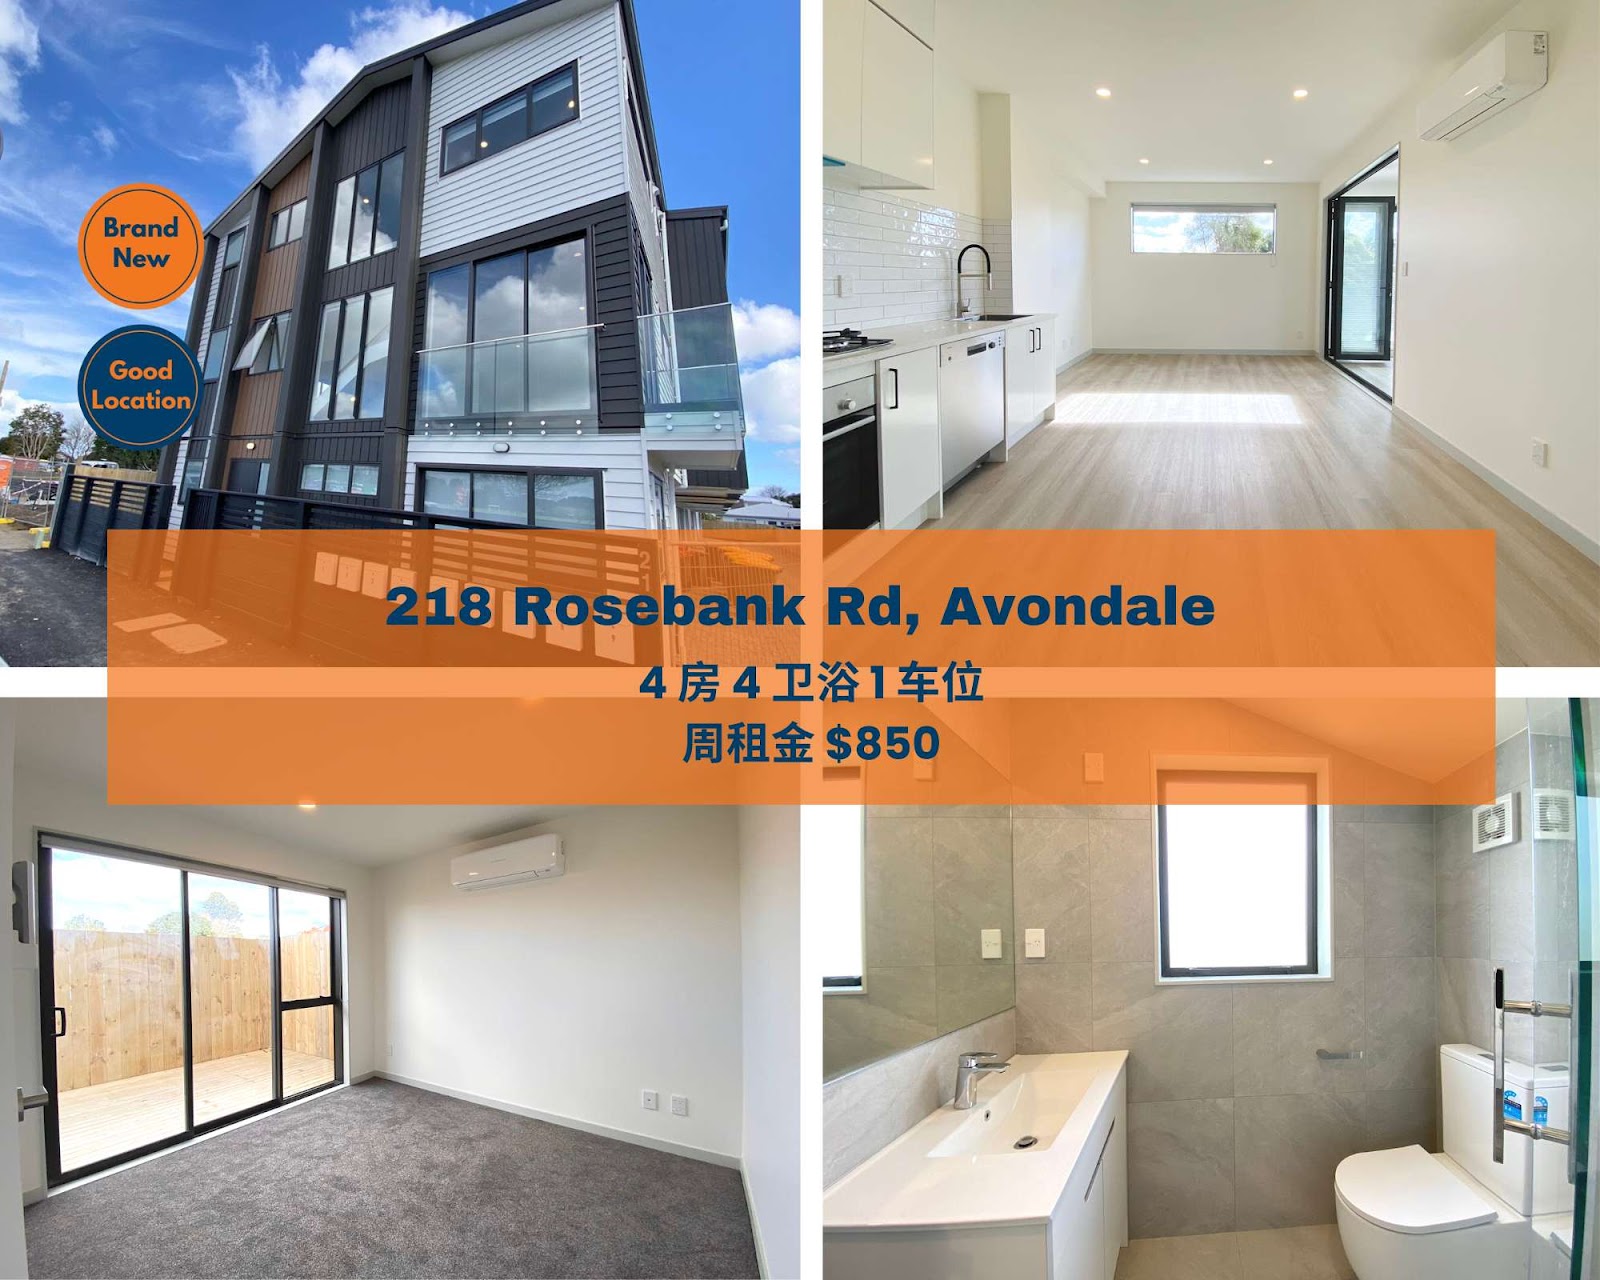 Avondale 4房4卫 全新 “为租而建”项目上市